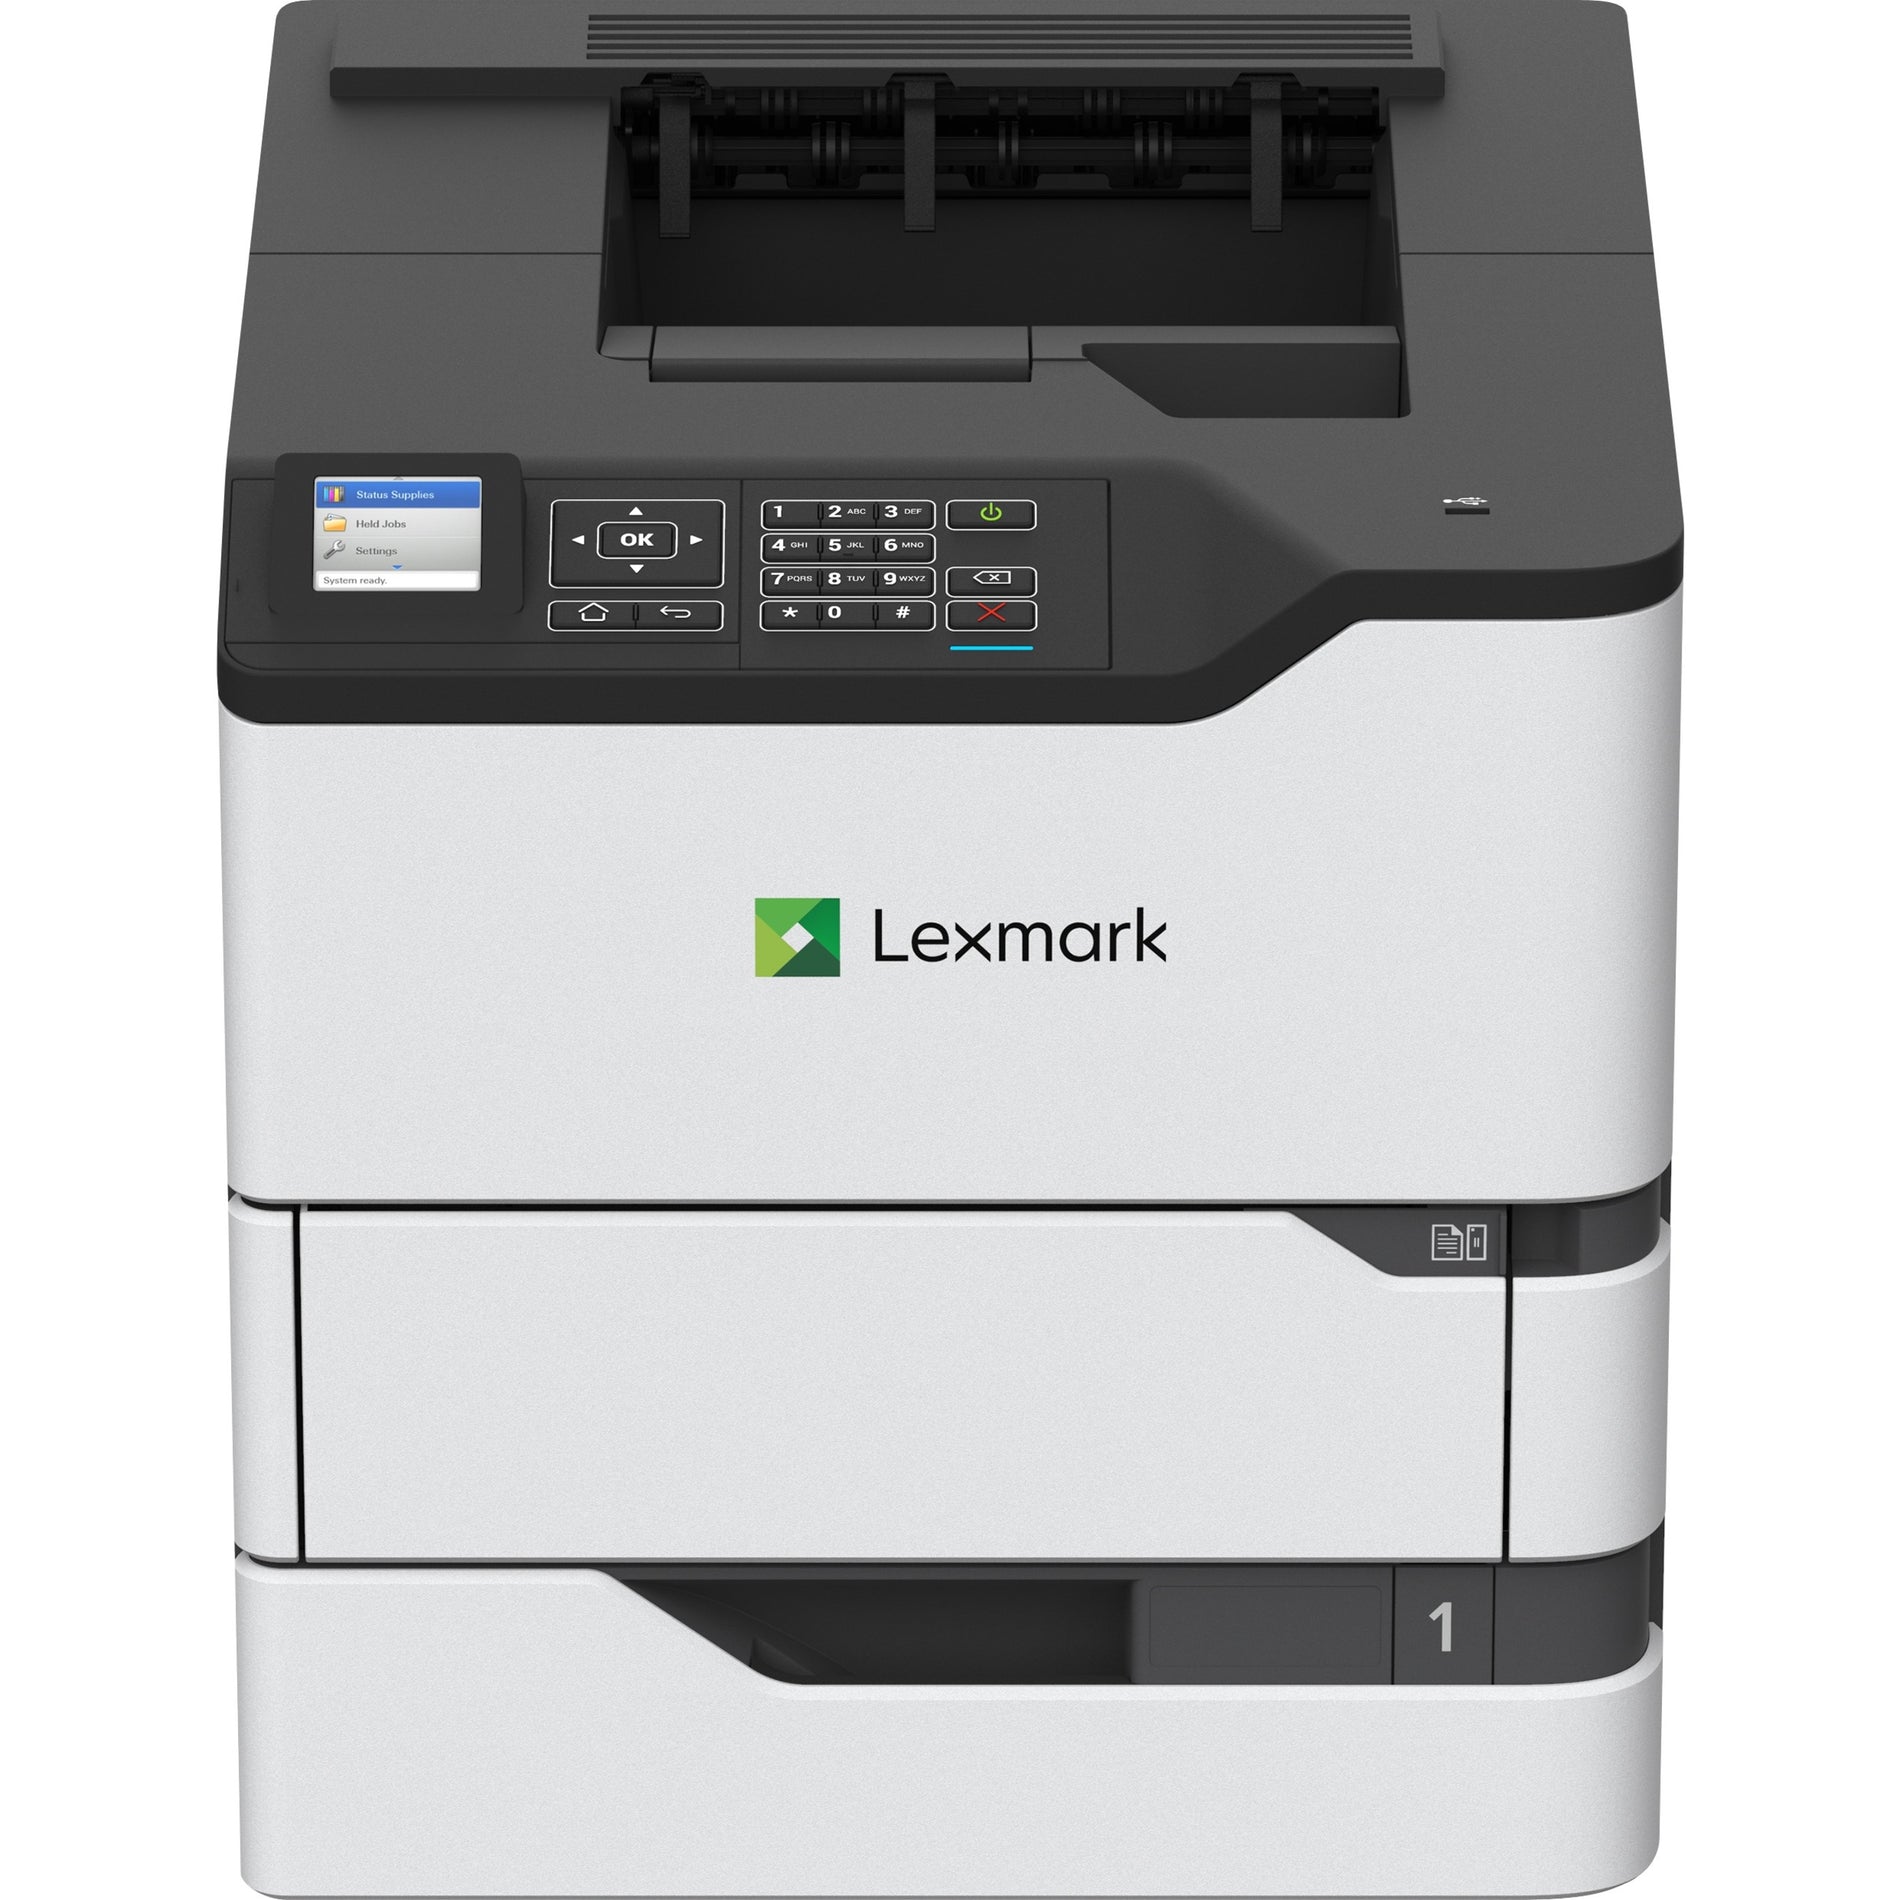 Imprimante laser Lexmark 50G0300 MS825dn monochrome impression recto verso automatique 70 ppm 1200 x 1200 dpi